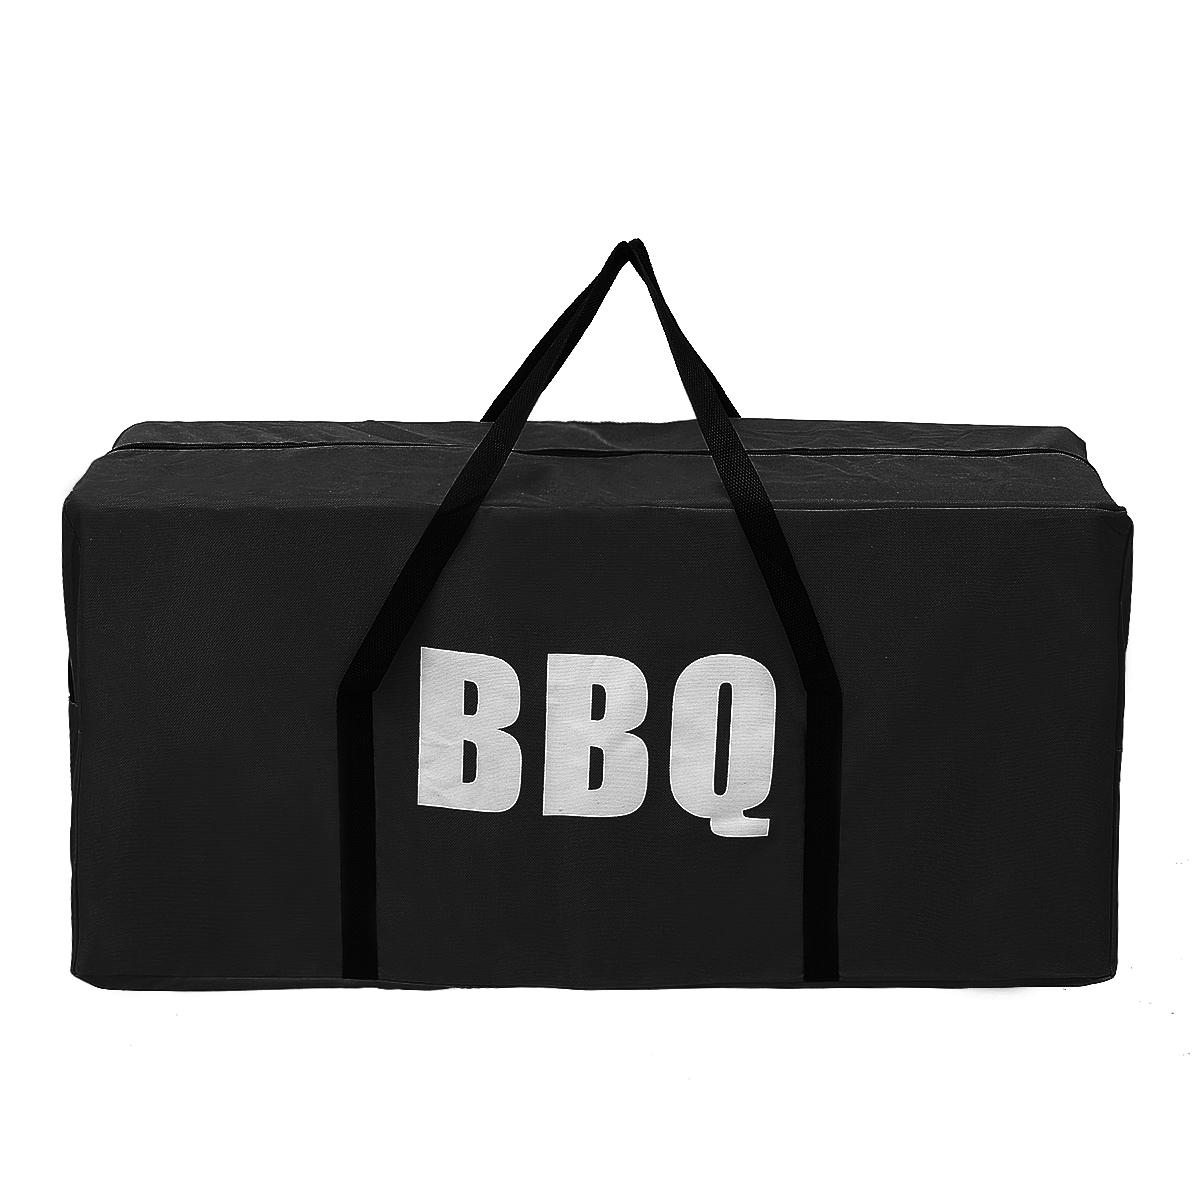 Outdoor tragbare BBQ Grill Tasche Oxford Camping Picknick Kochherd Tragetasche